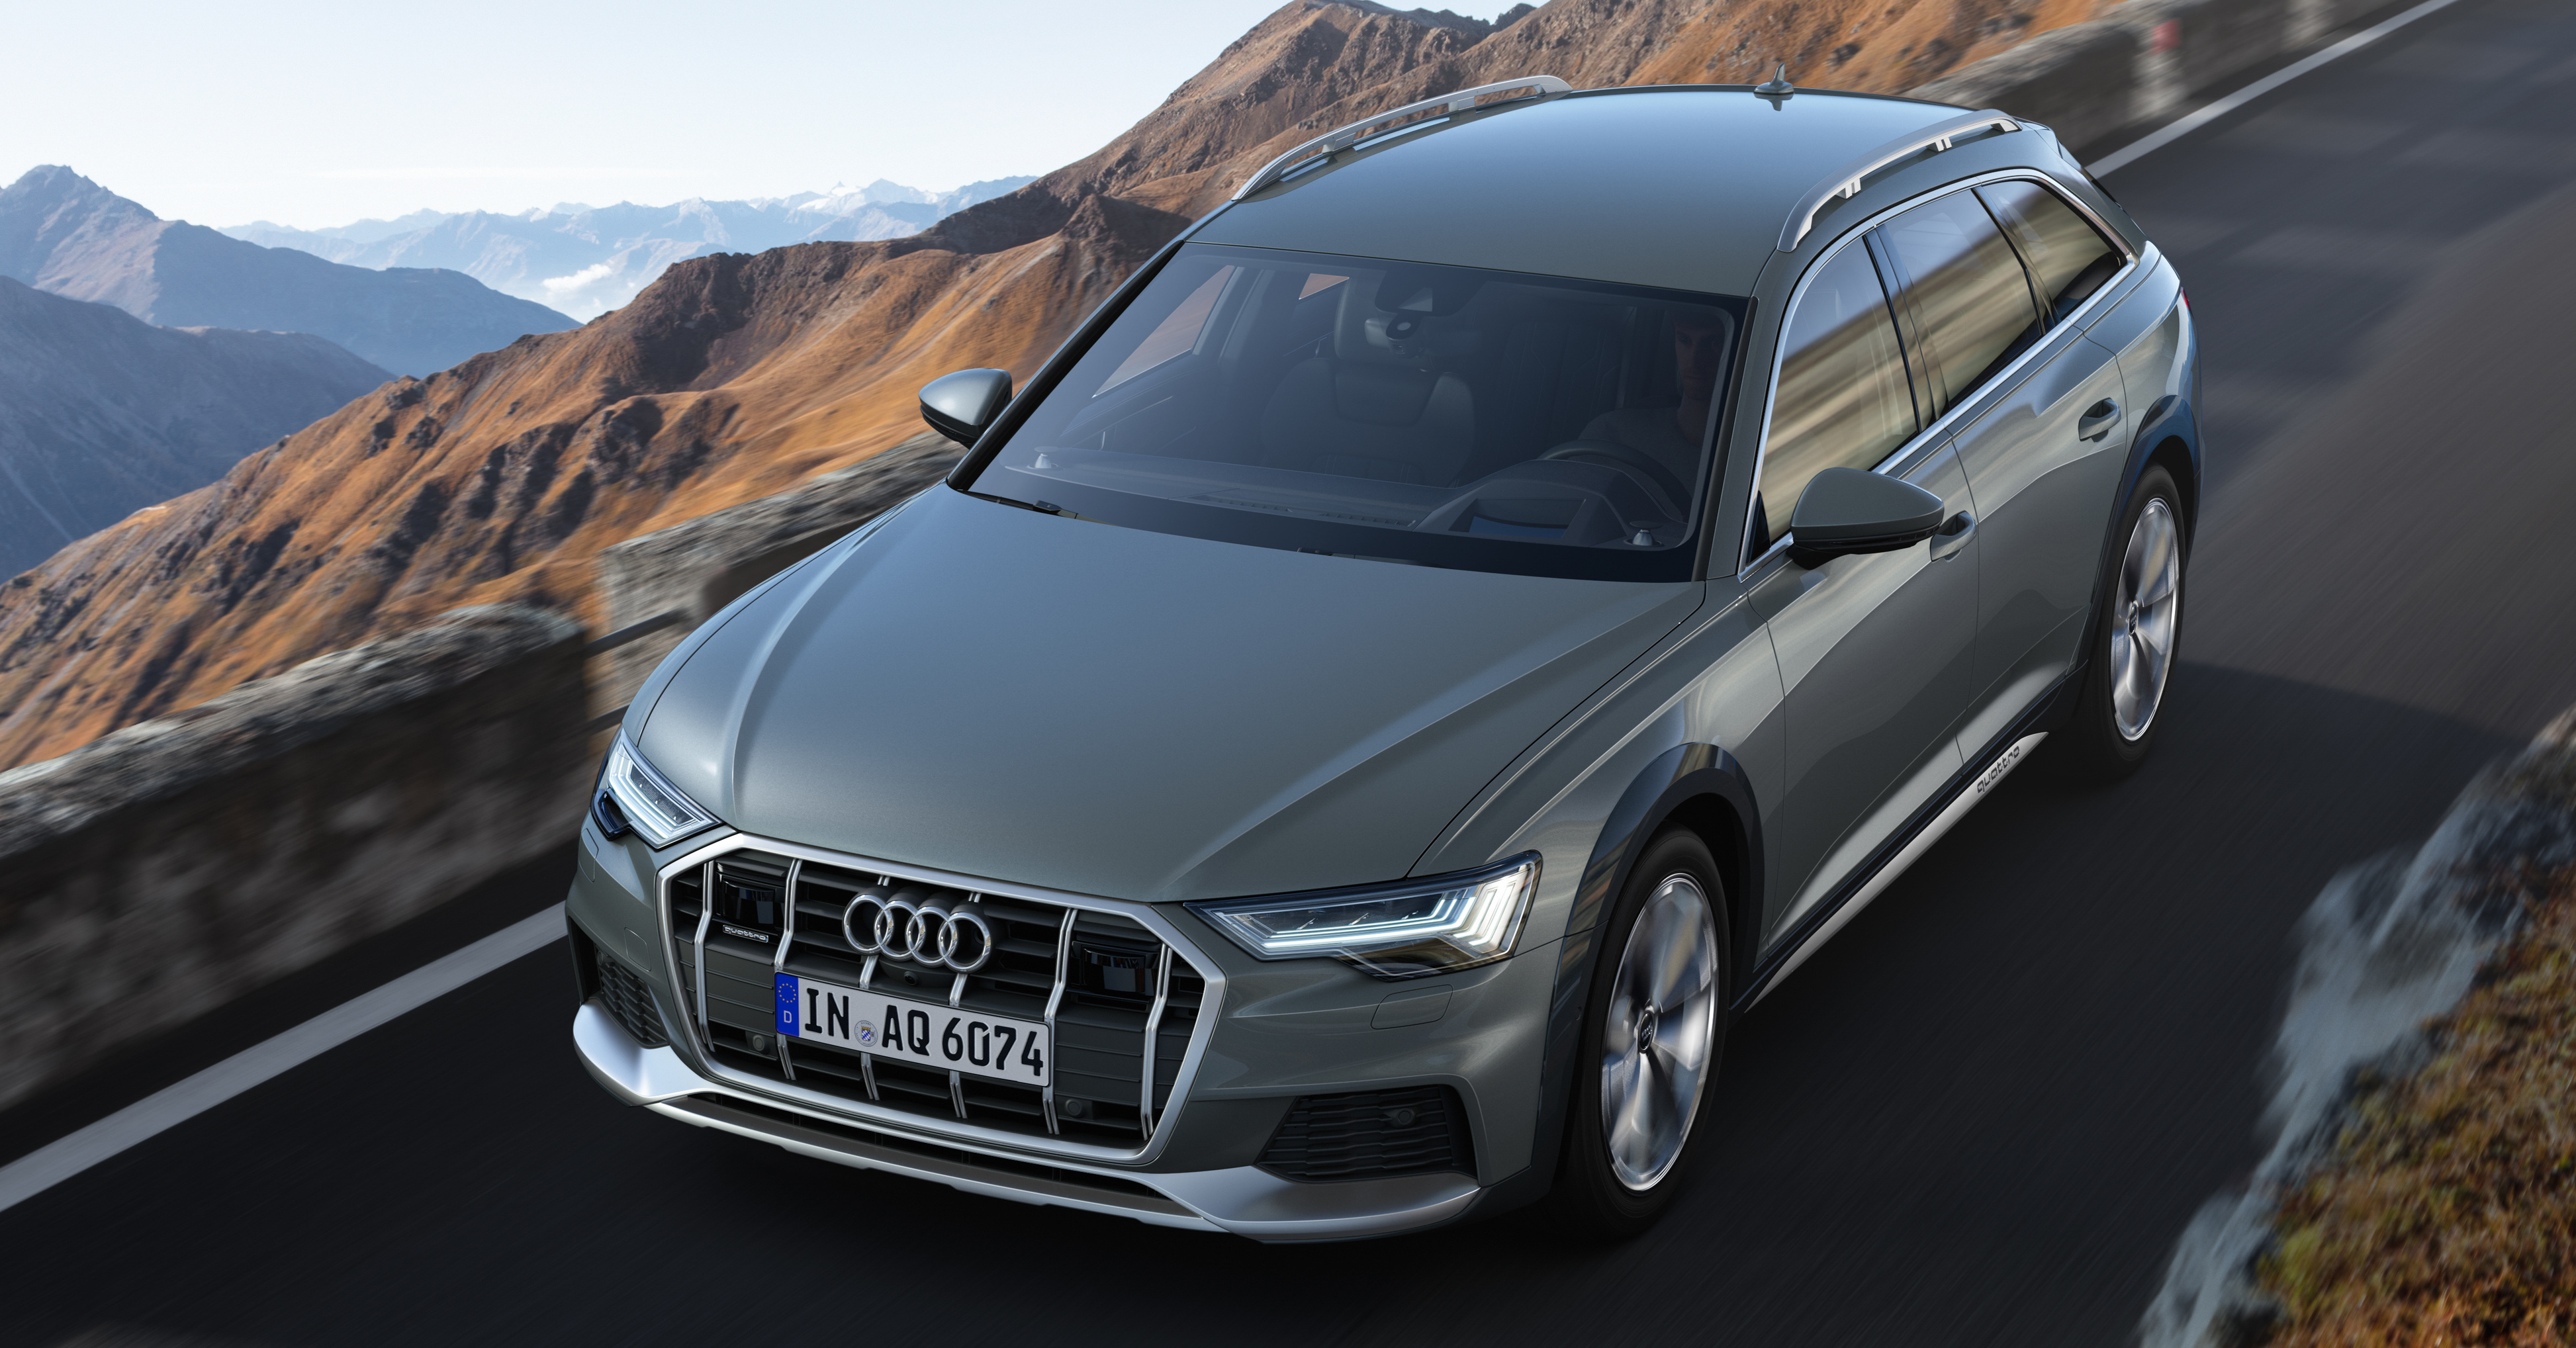 Audi A6 allroad quattro mod specifications